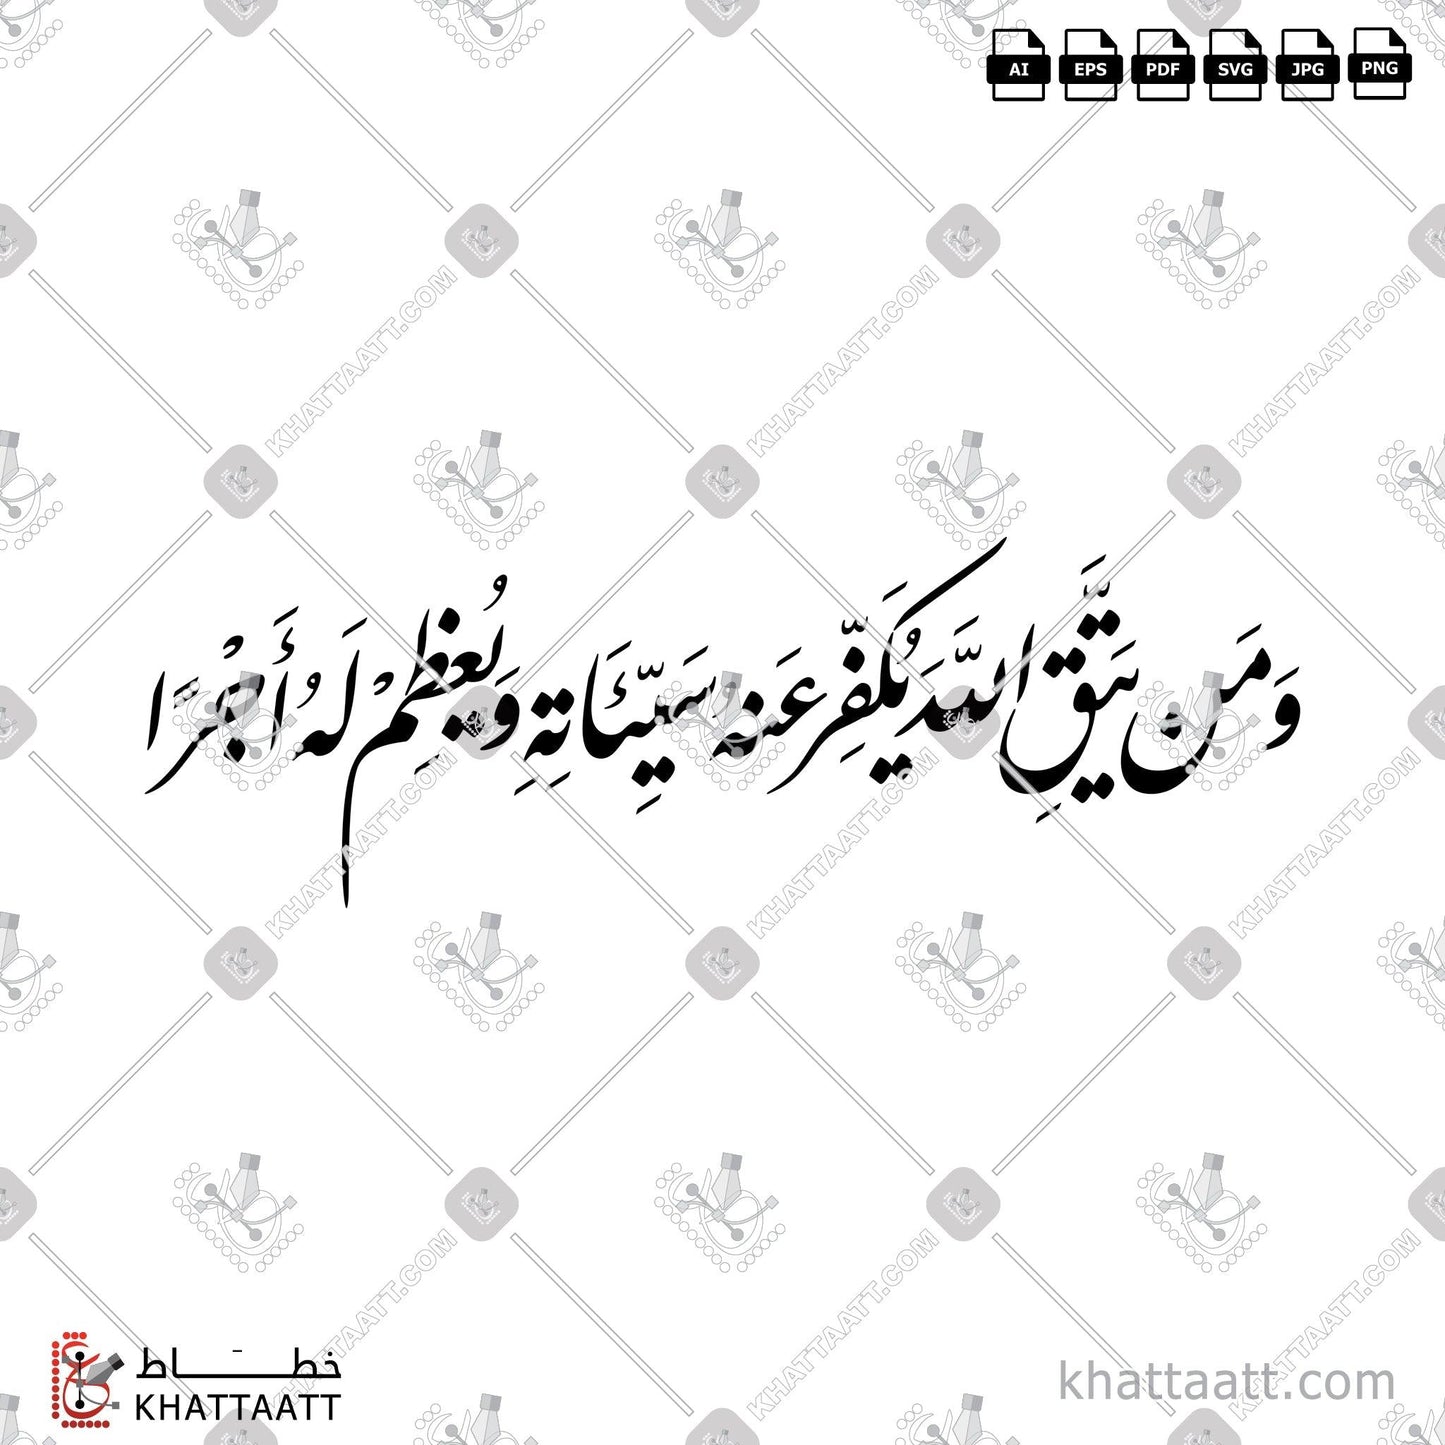 Download Arabic Calligraphy of ومن يتق الله يكفر عنه سيئاته ويعظم له أجرا in Farsi - الخط الفارسي in vector and .png